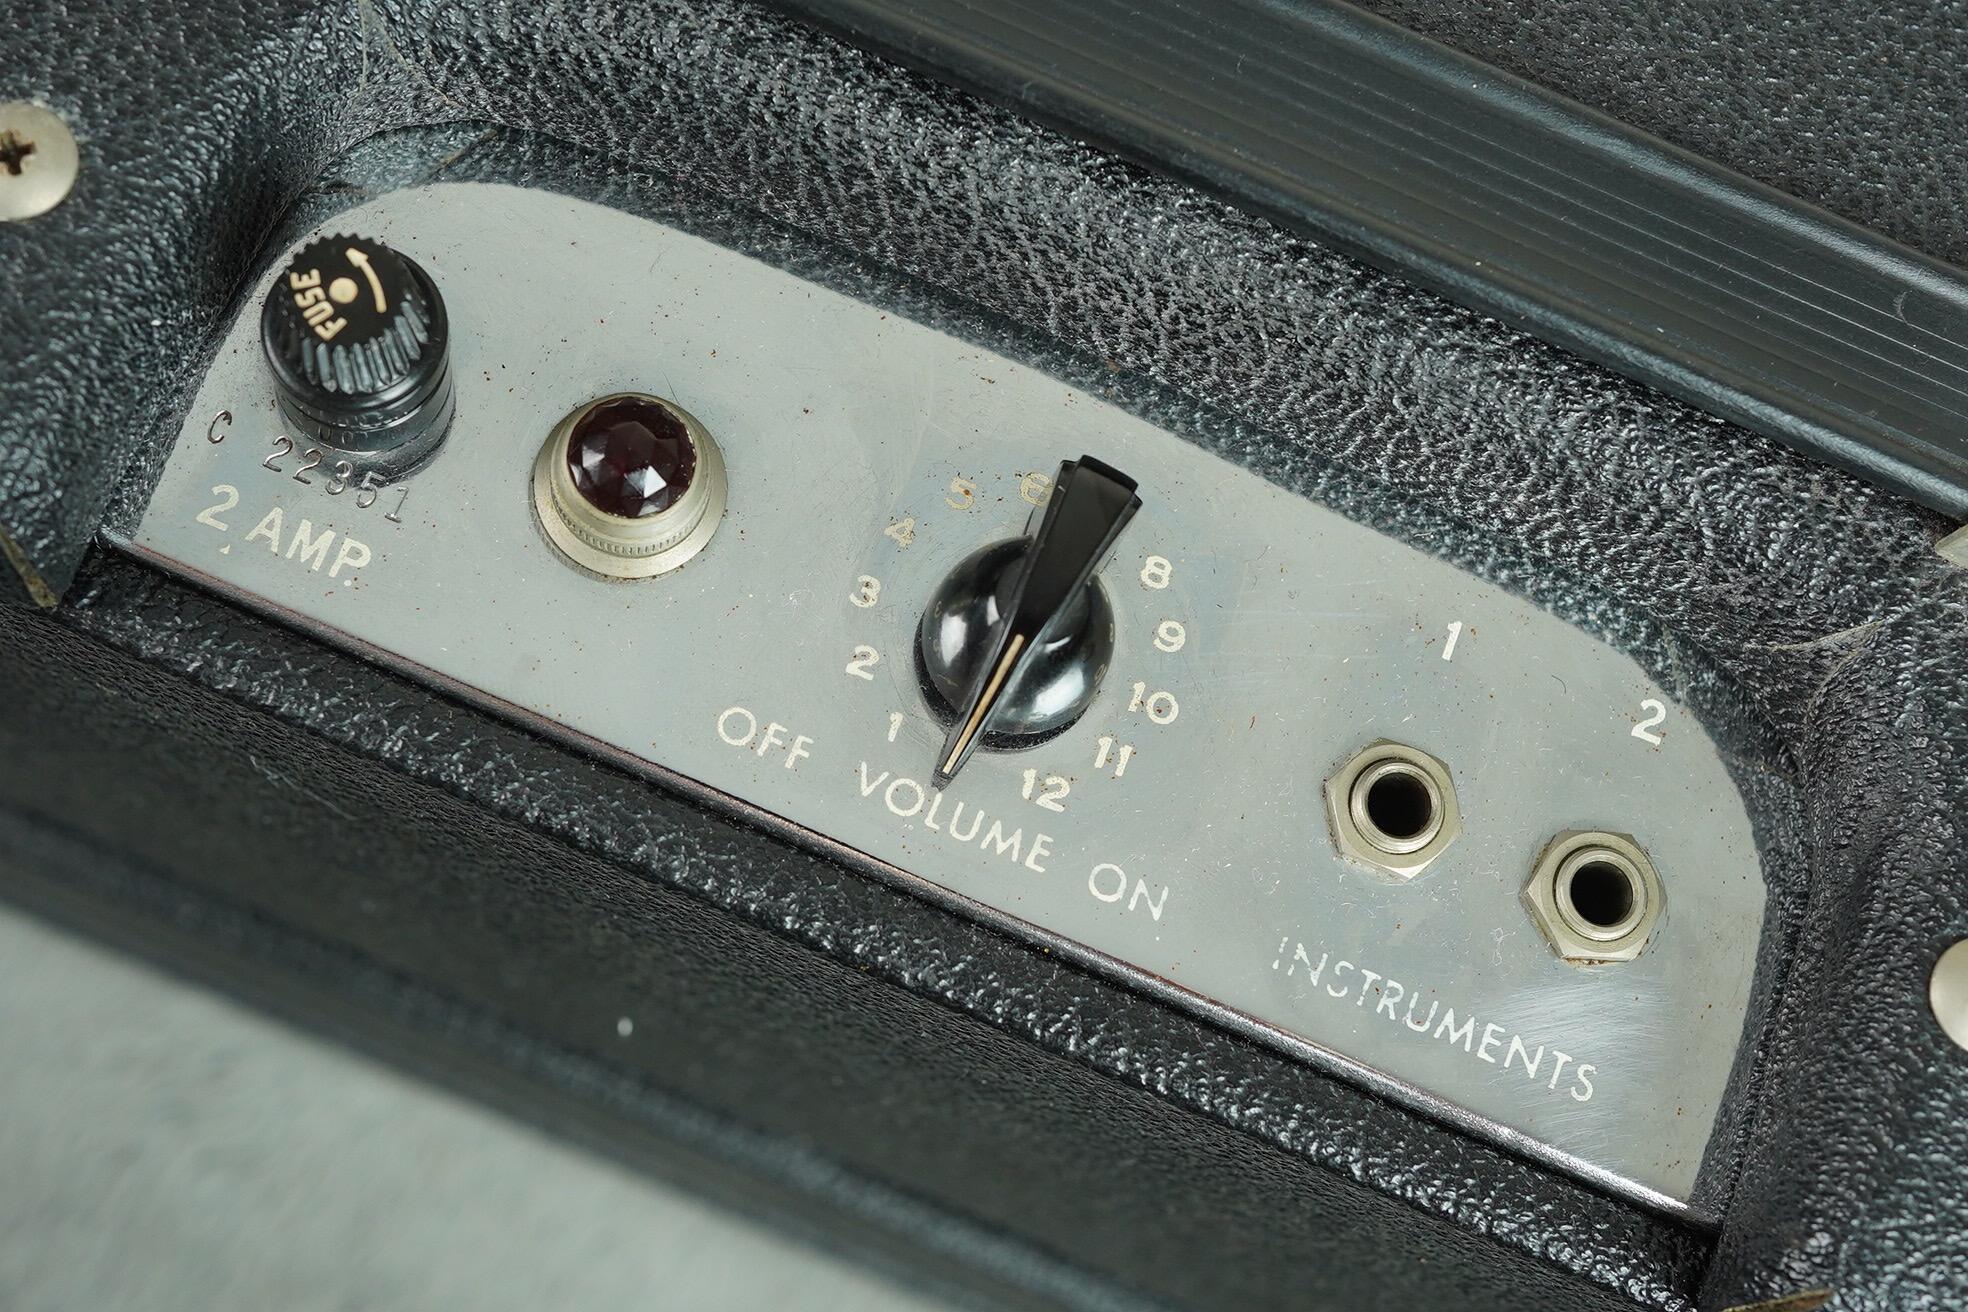 1964 Fender Black Tweed Champ 5F1